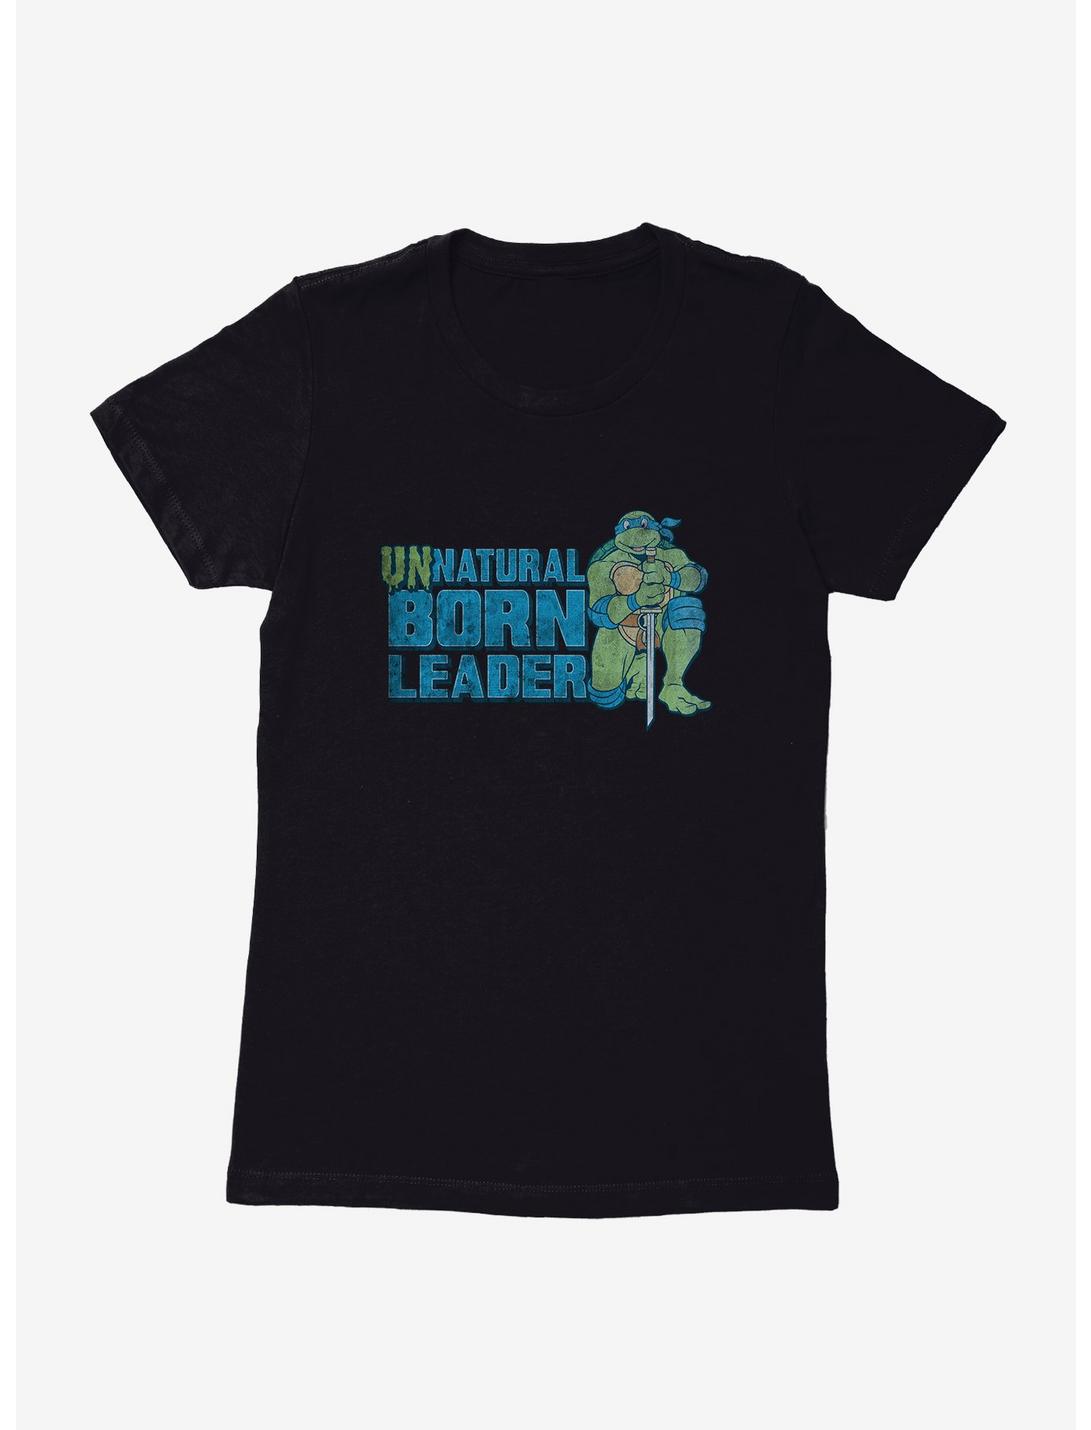 Teenage Mutant Ninja Turtles Unnatural Leader Womens T-Shirt, BLACK, hi-res